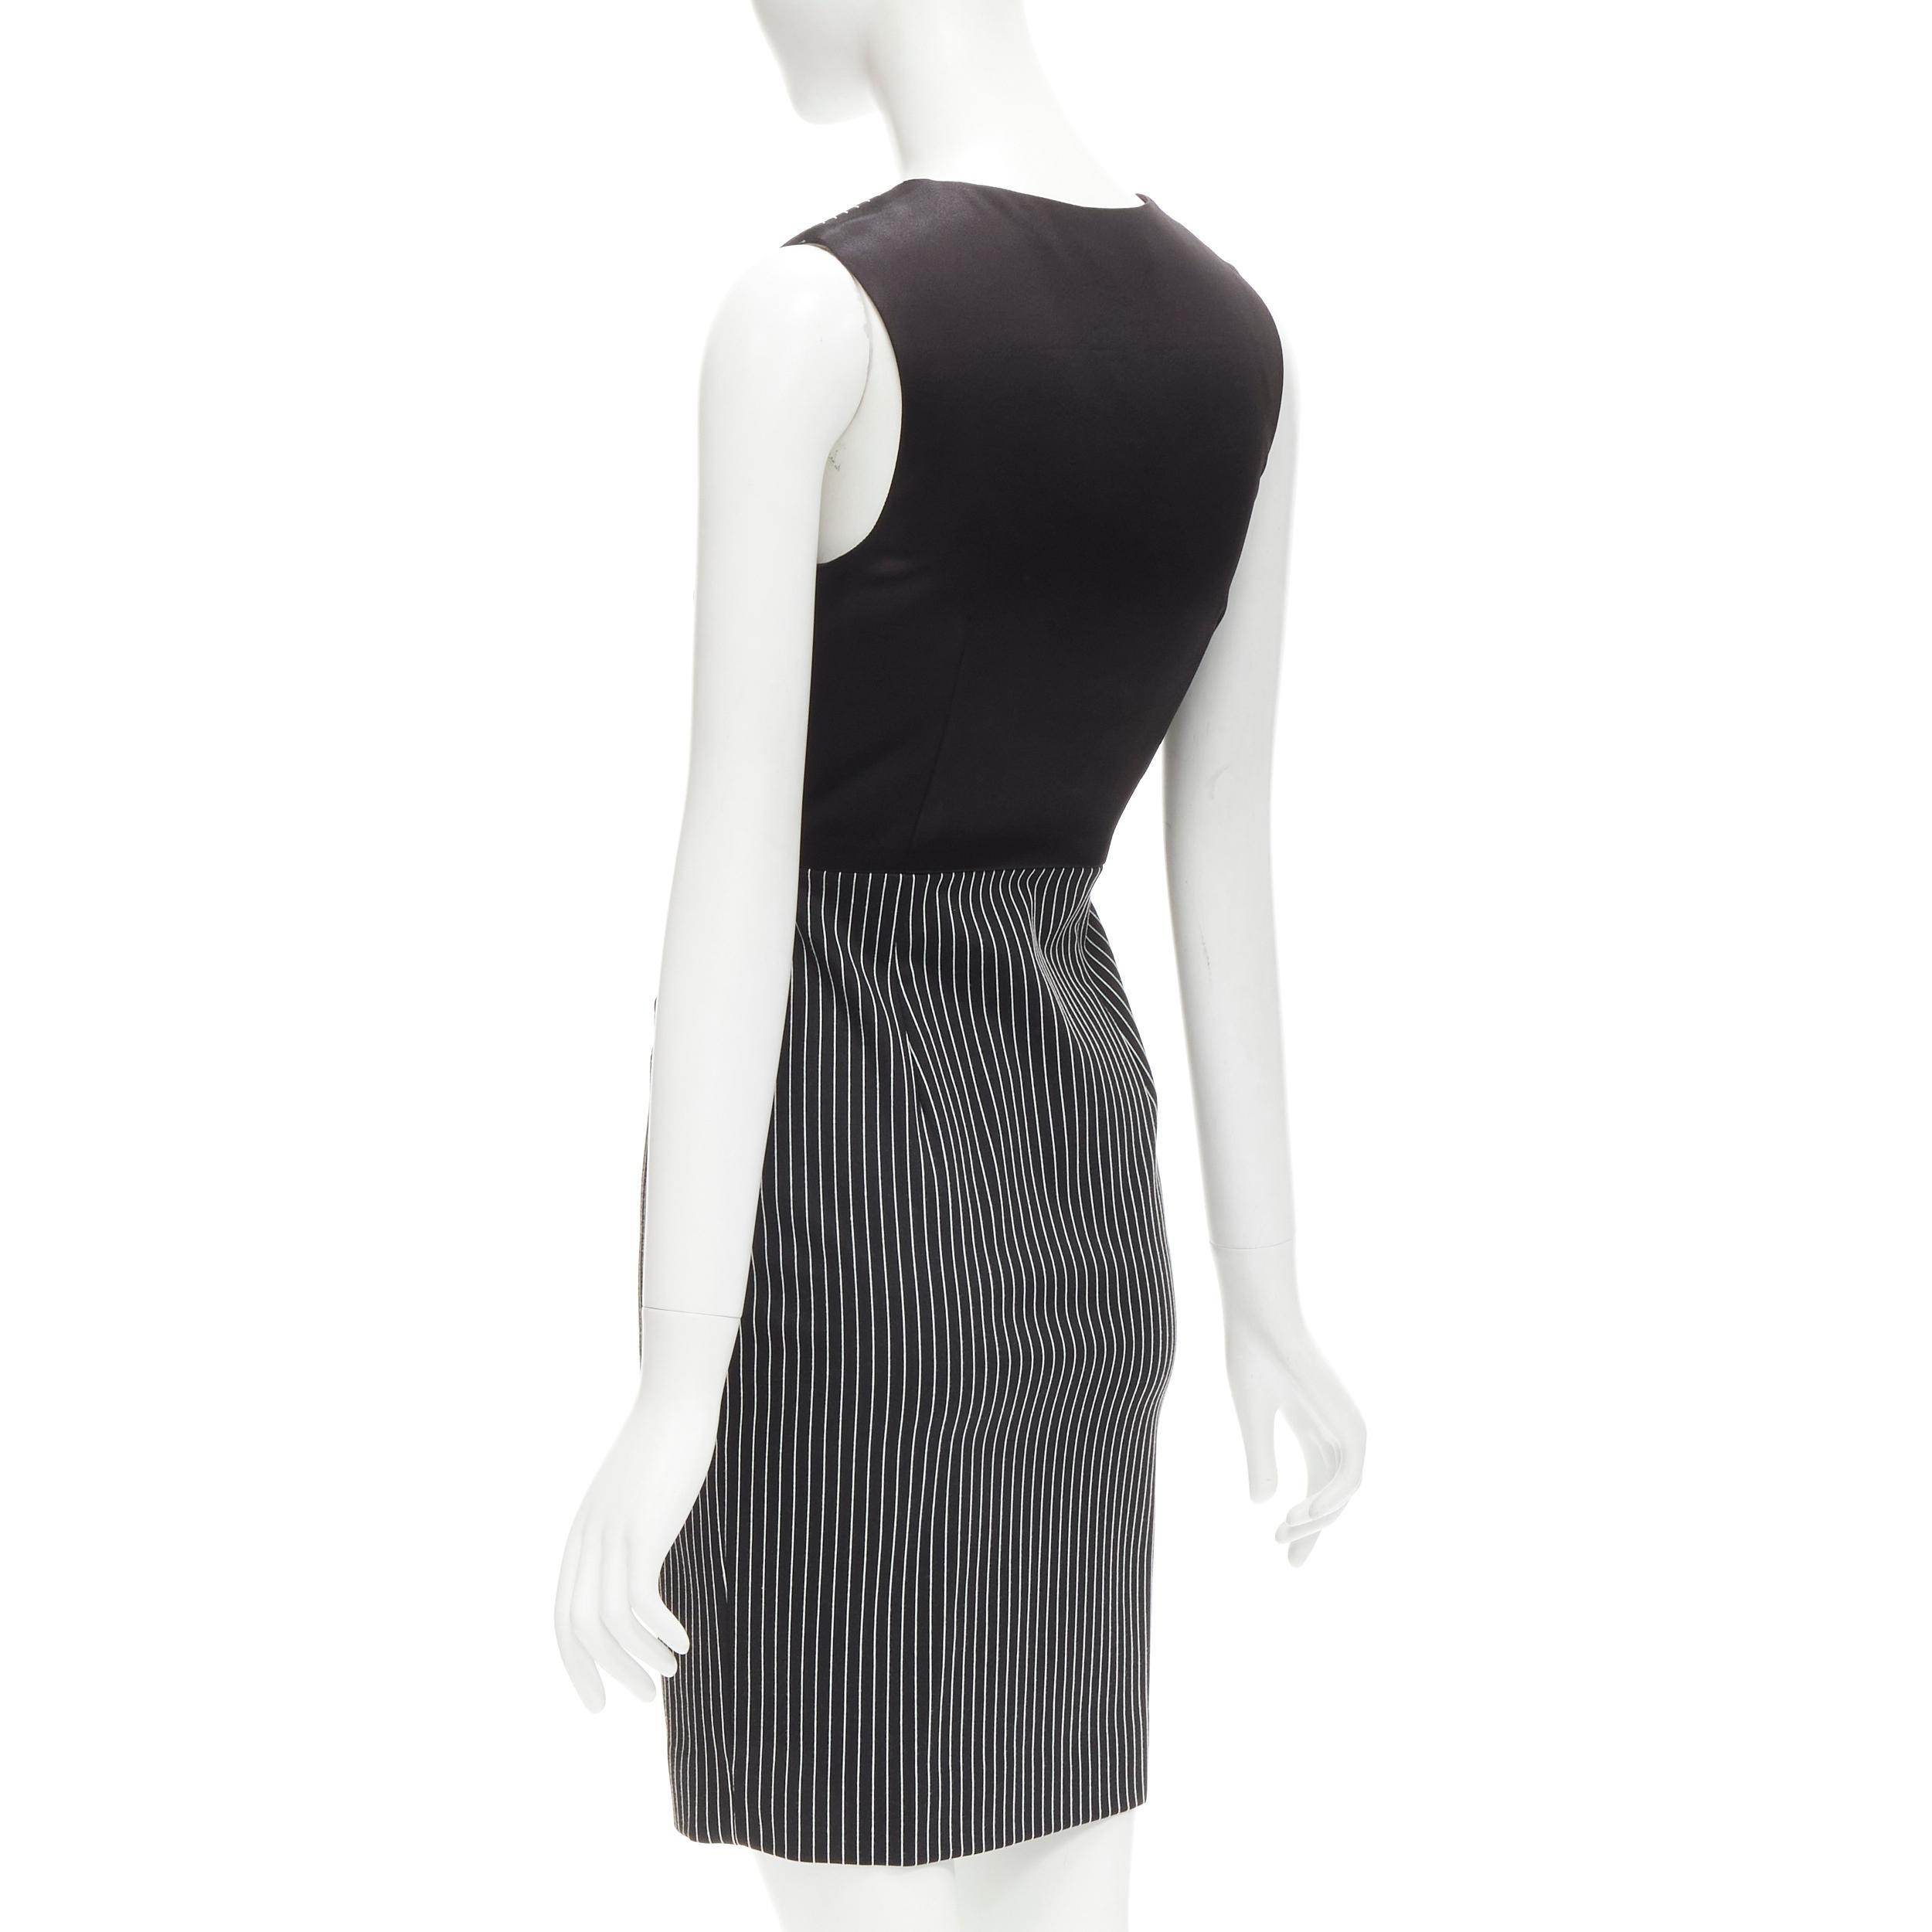 DIANE VON FURSTENBERG Gilet Dress black white vertical pinstripes dress US0 XS For Sale 1